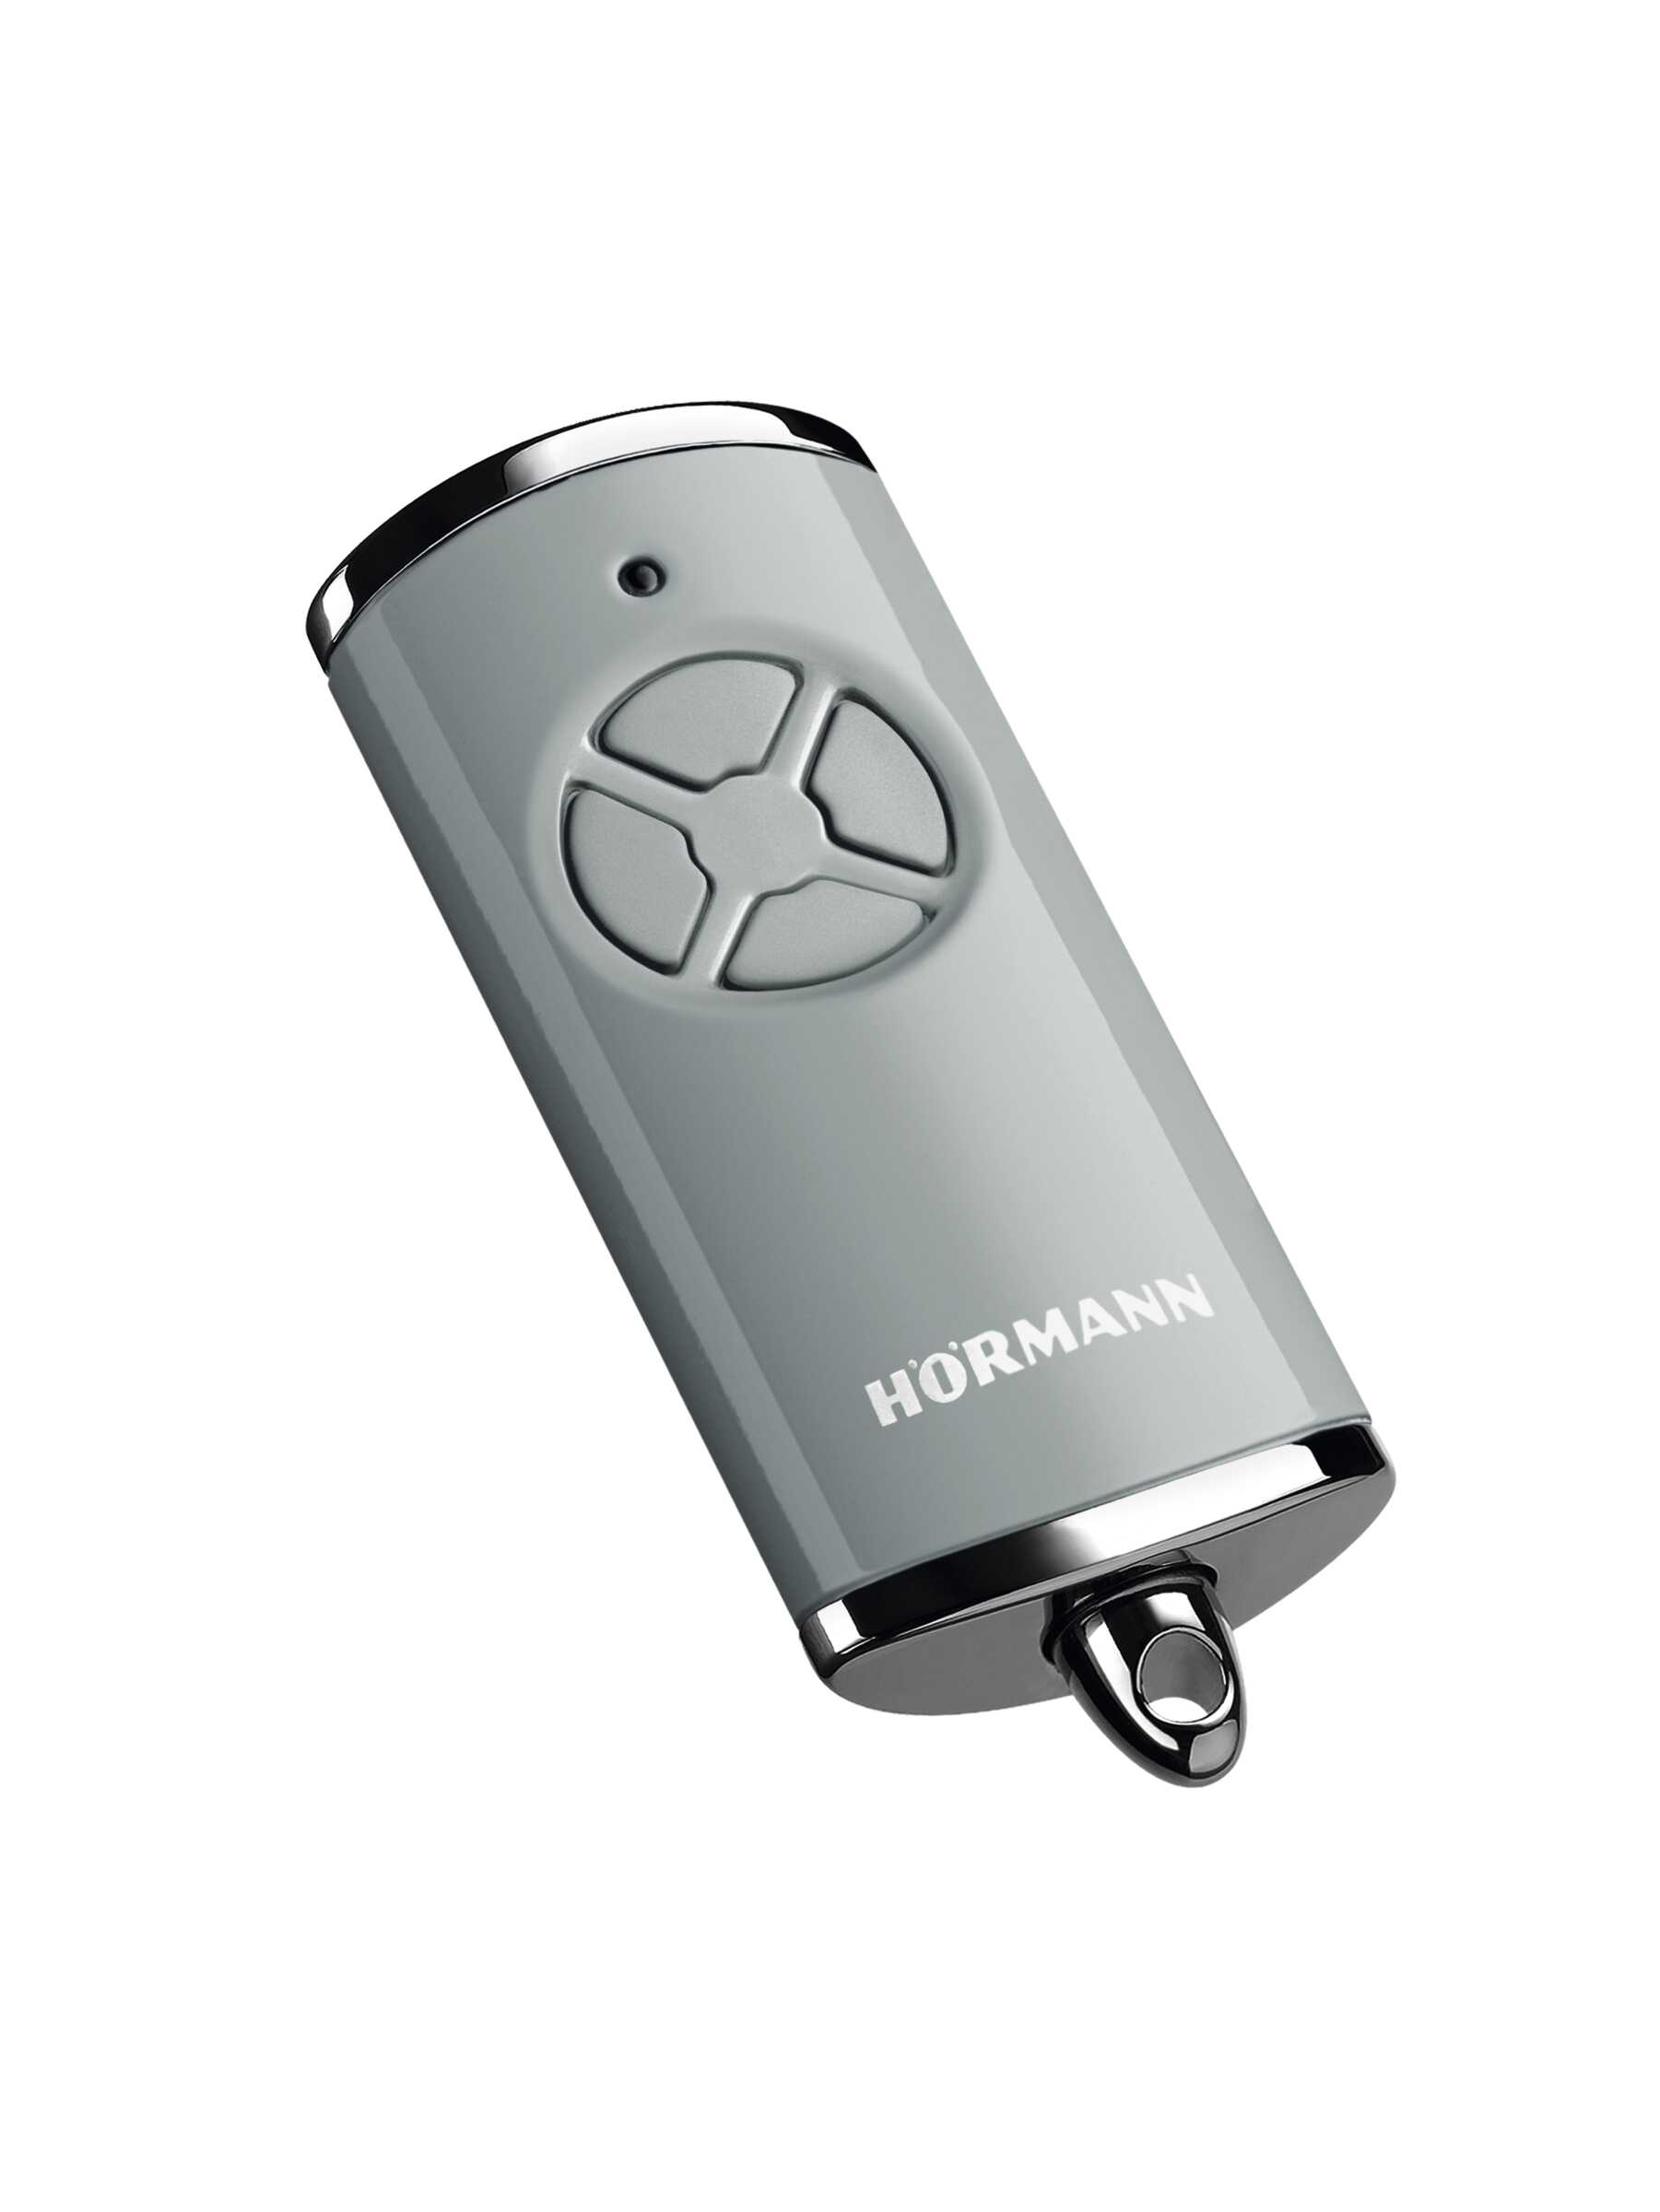 Hörmann Handsender HSE 4, BiSecur, classic grey